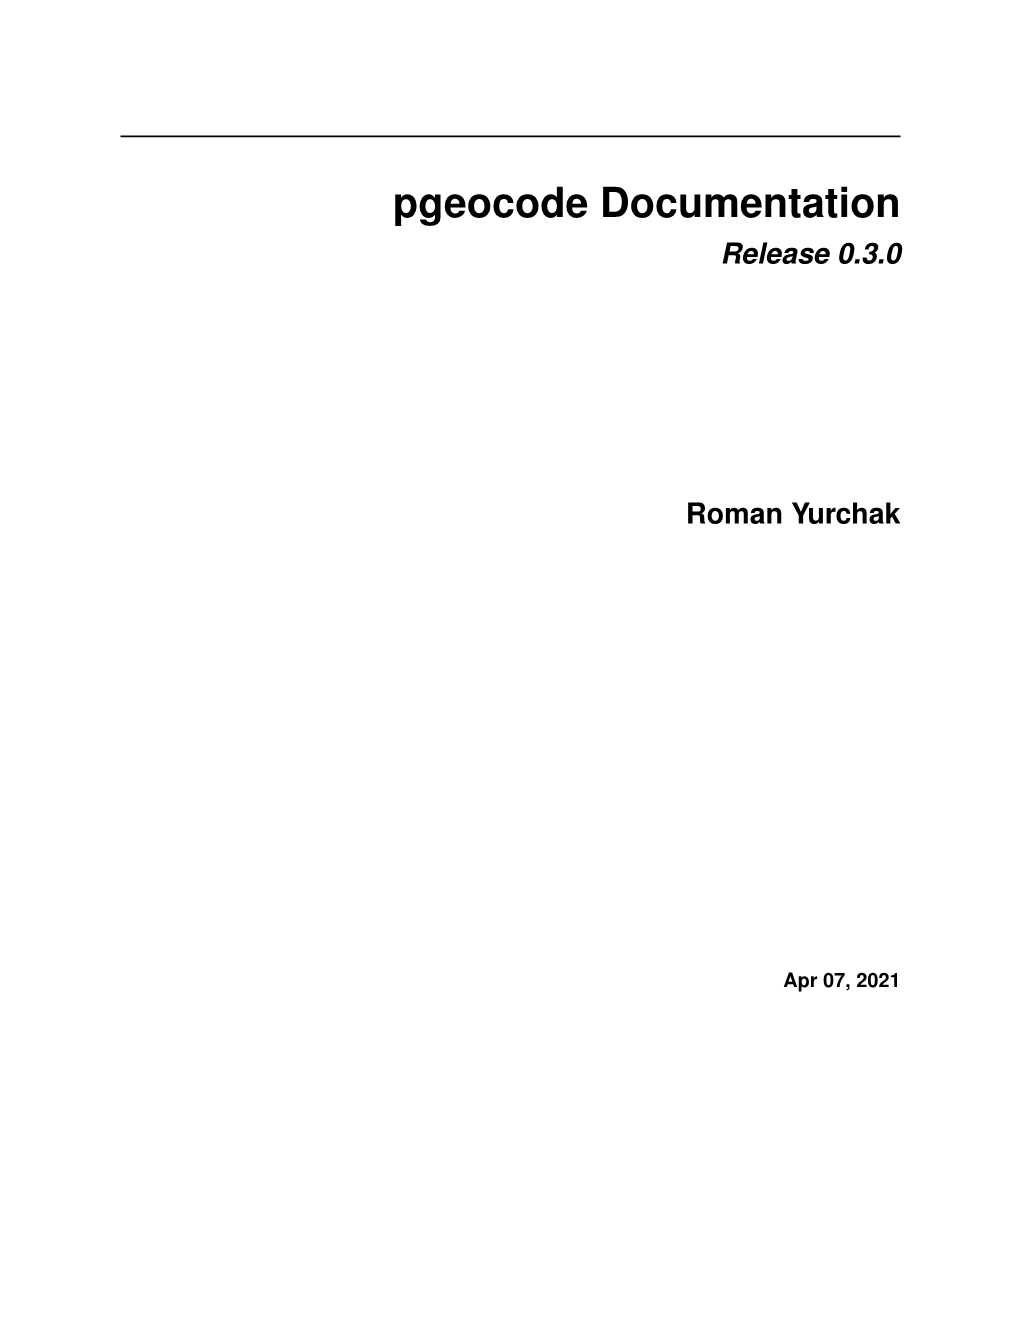 Pgeocode Documentation Release 0.3.0